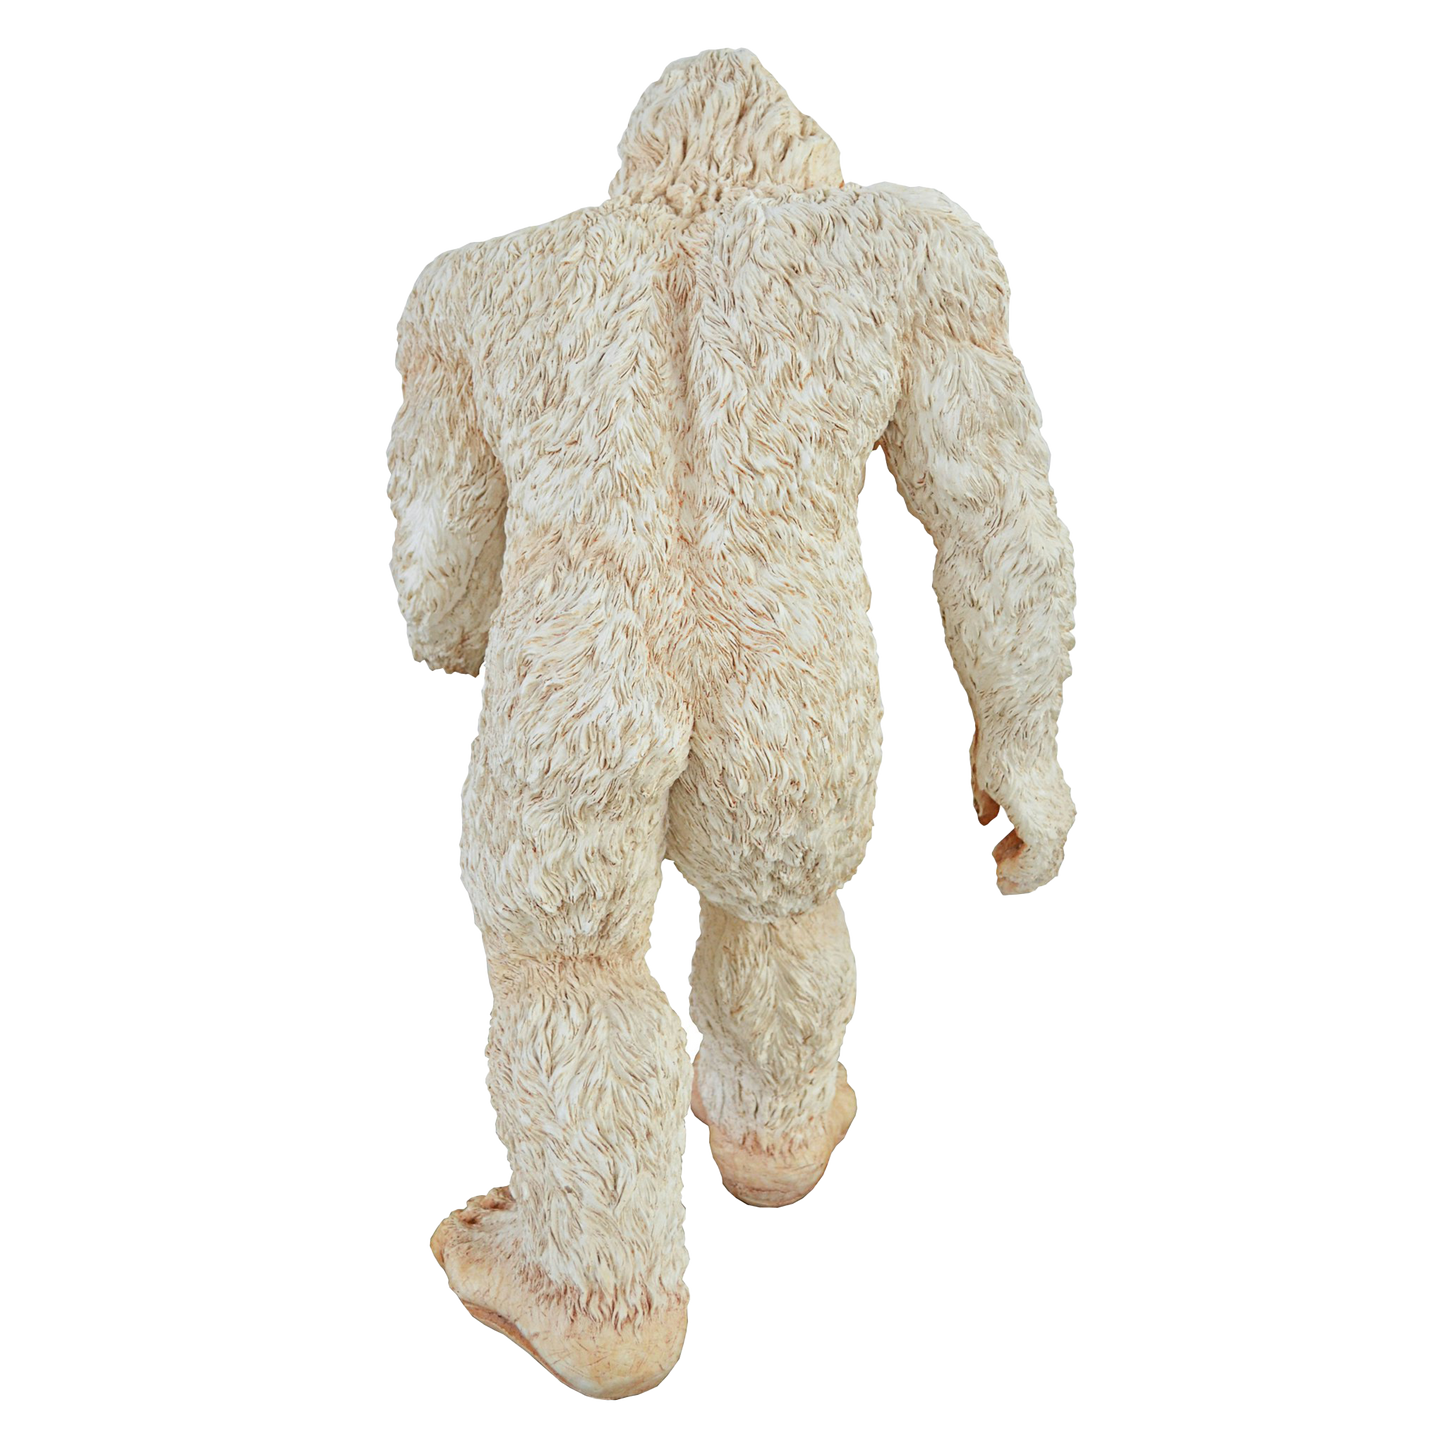 Magnificient Abominable Snowman Large Statue